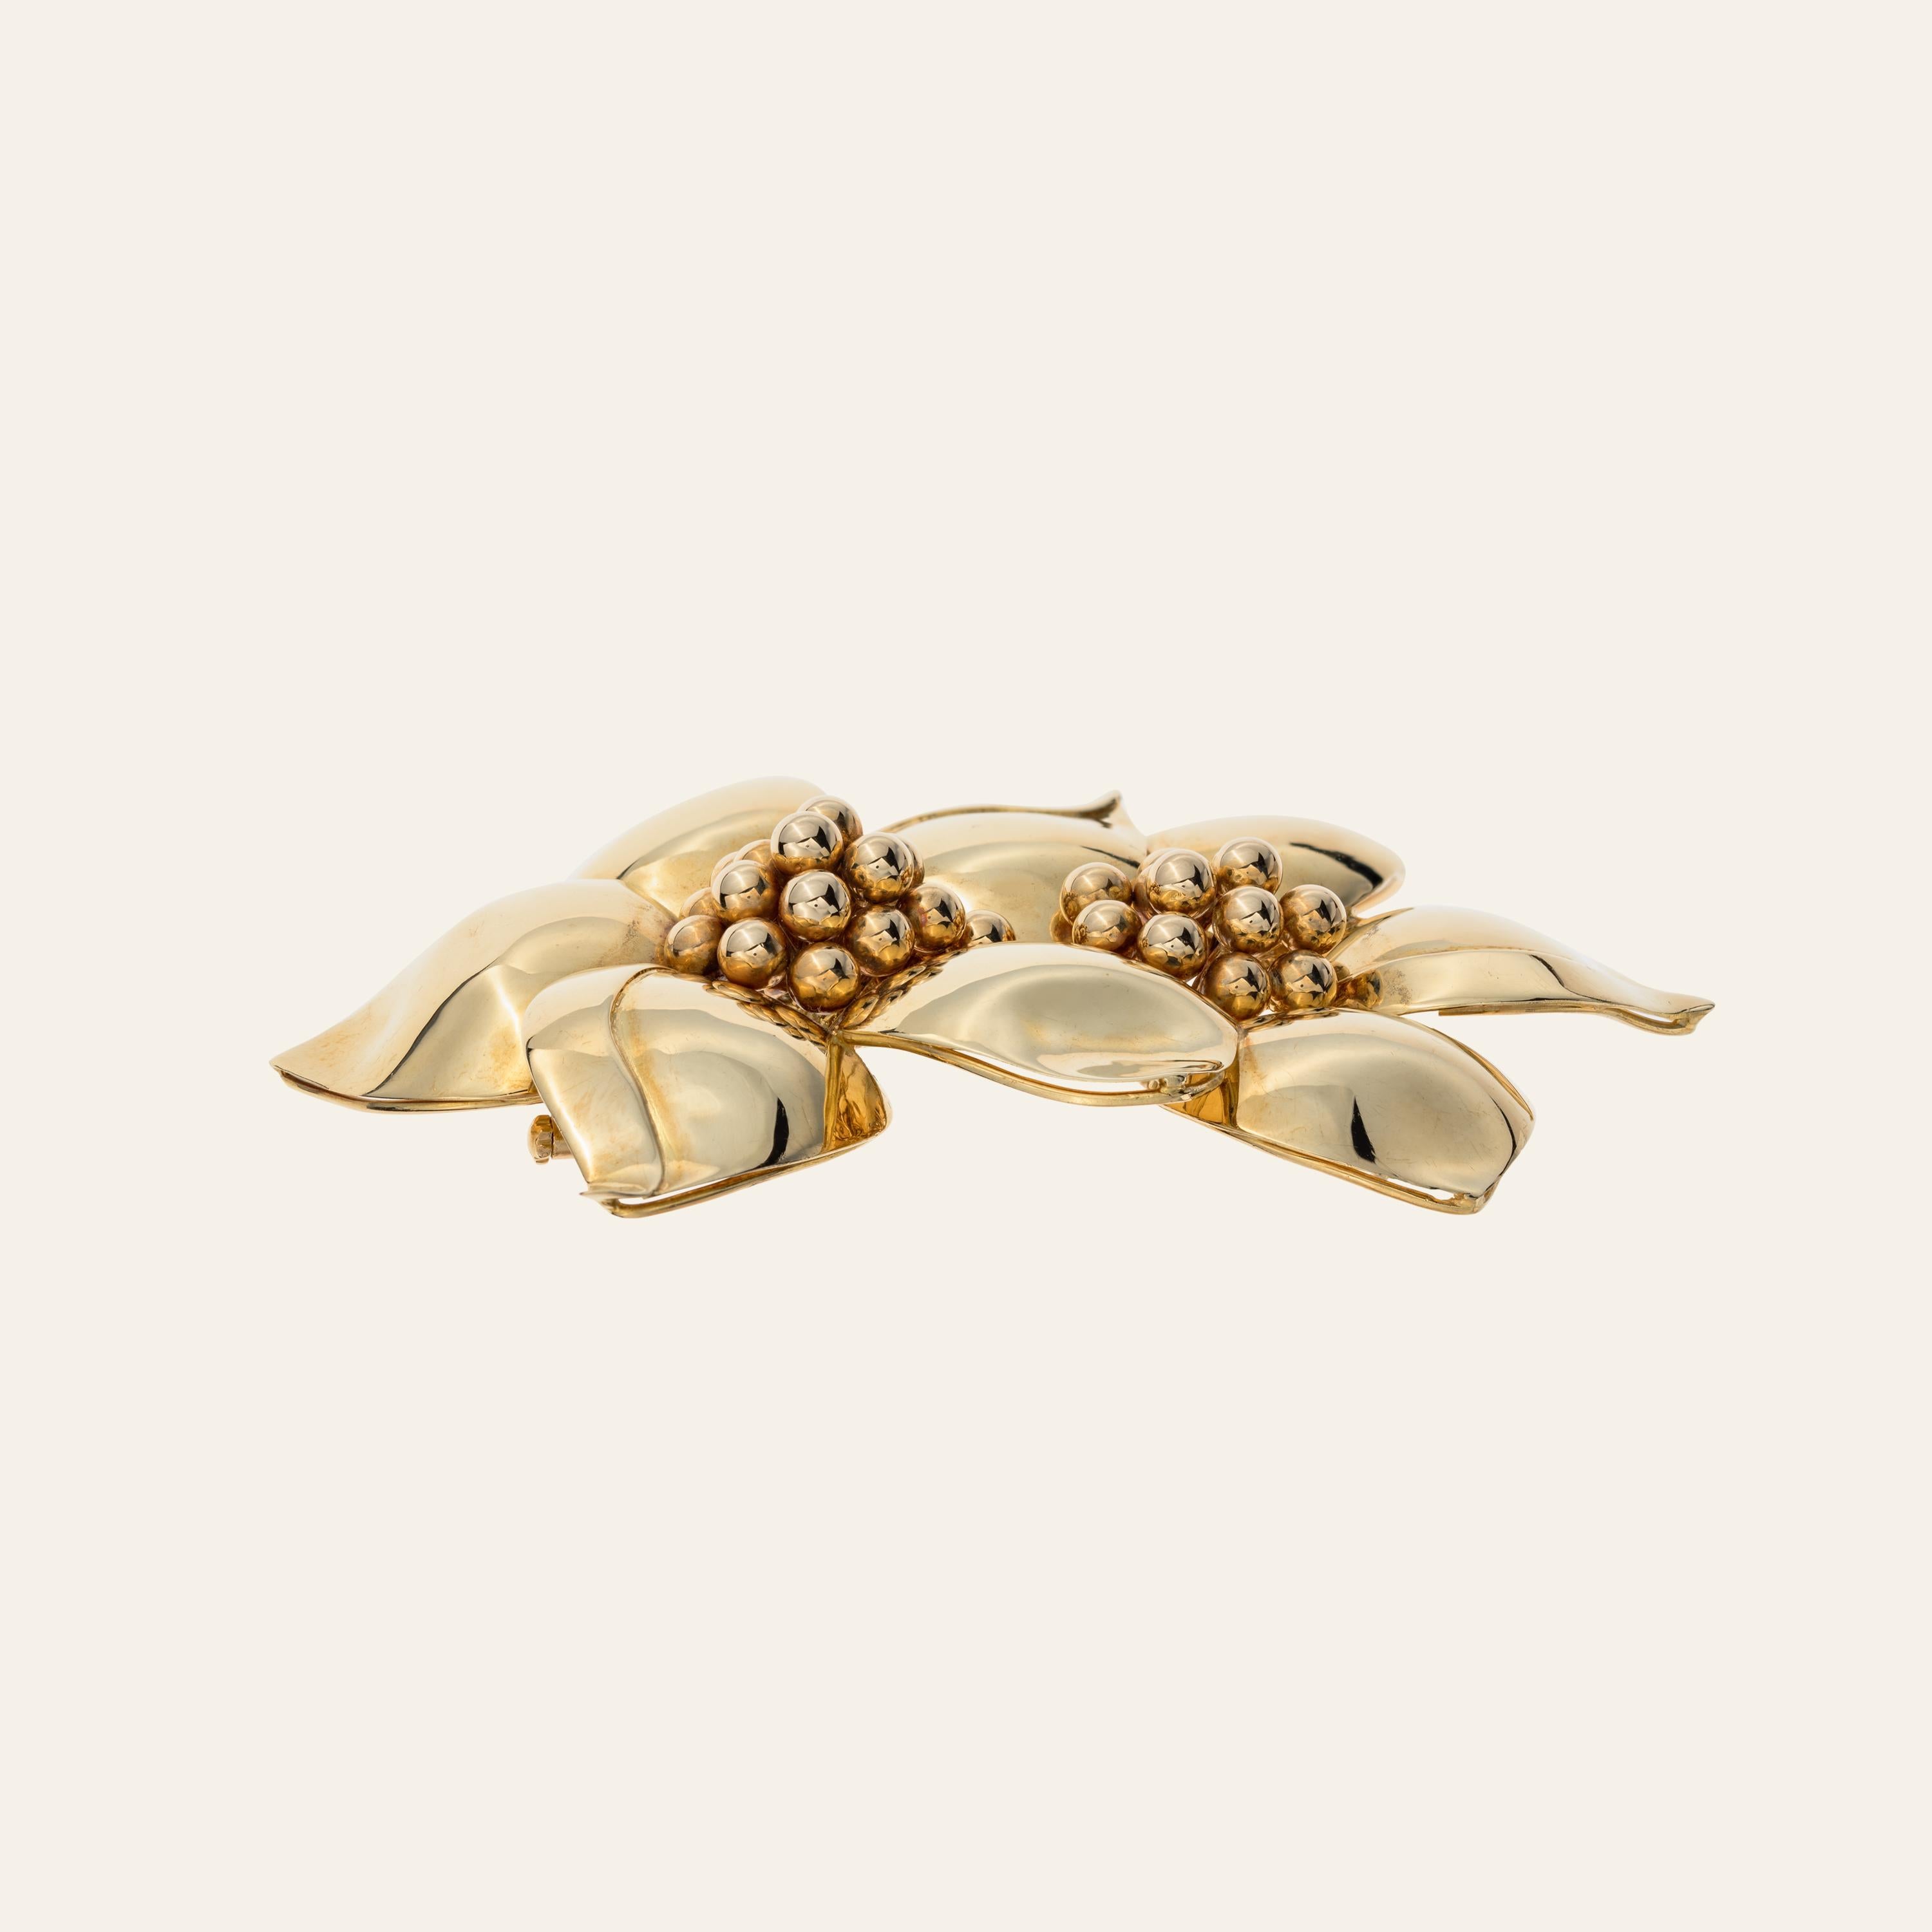 Sabbadini Jewelry, Flower Yellow Gold Brooch.
18k Yellow gold 'double flower' brooch. 
Yellow Gold 38,80gr
Made In Italy
Via Montenapoleone